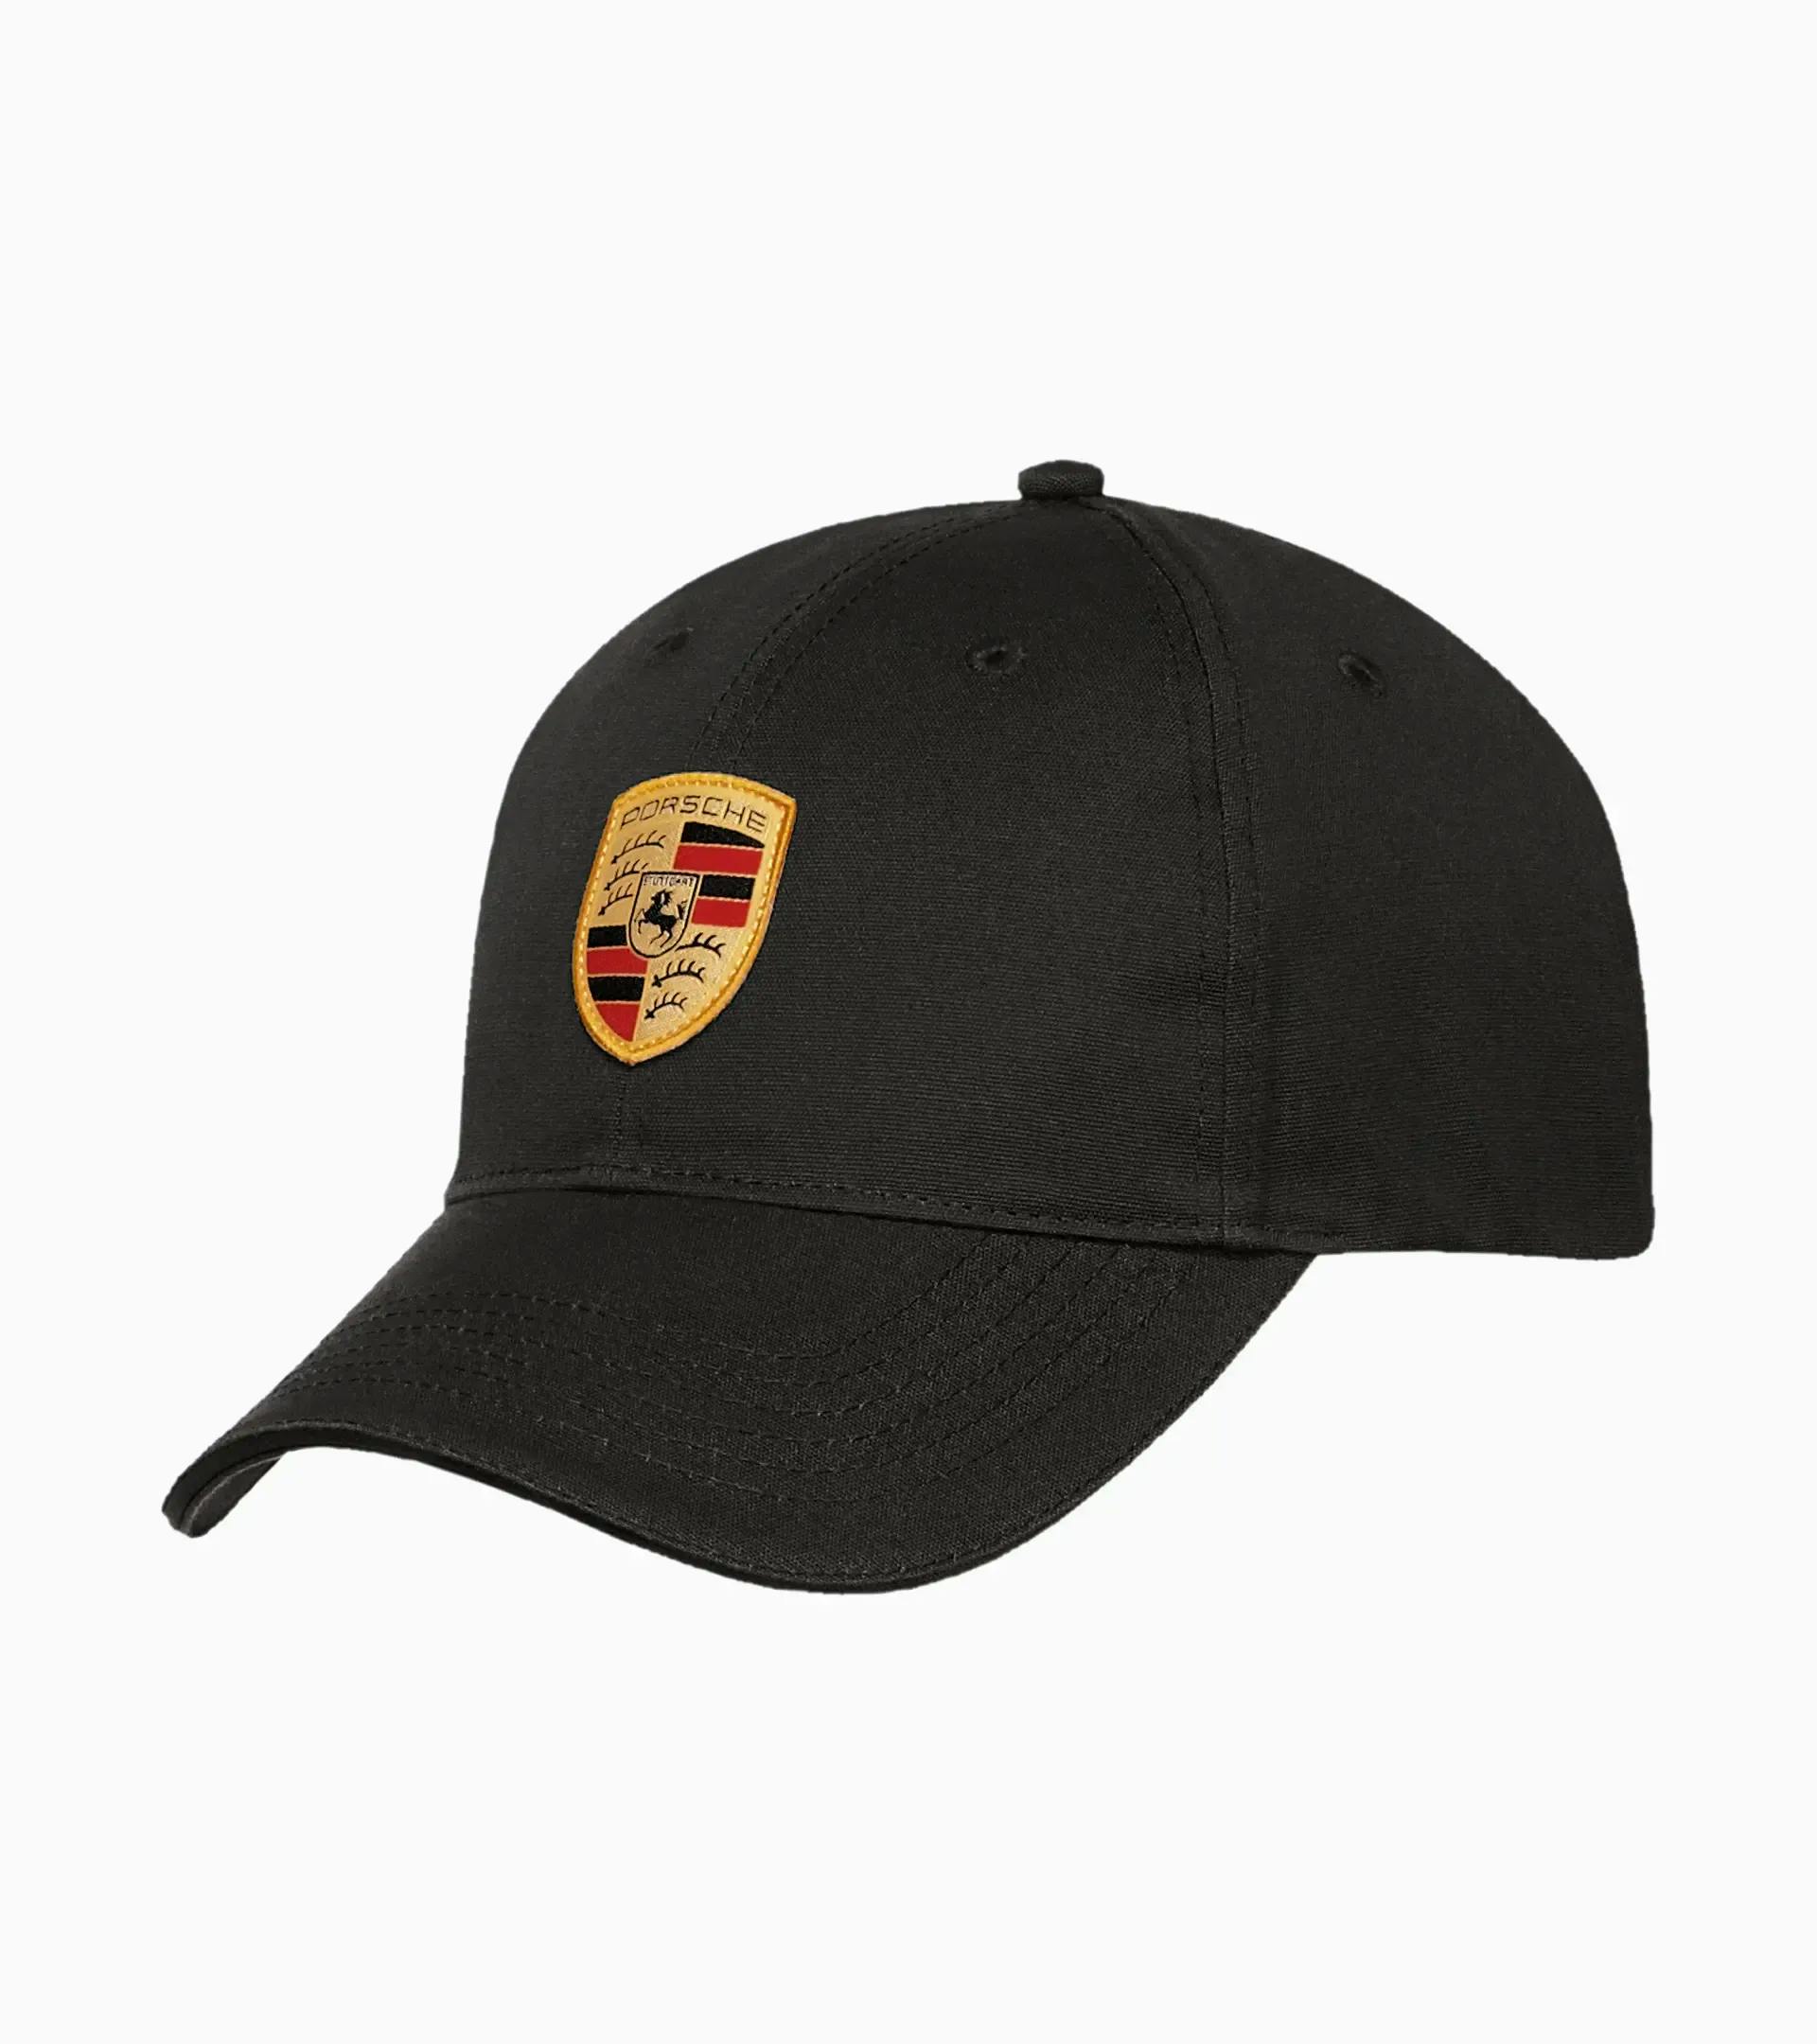 Porsche crest cap – Essential 1